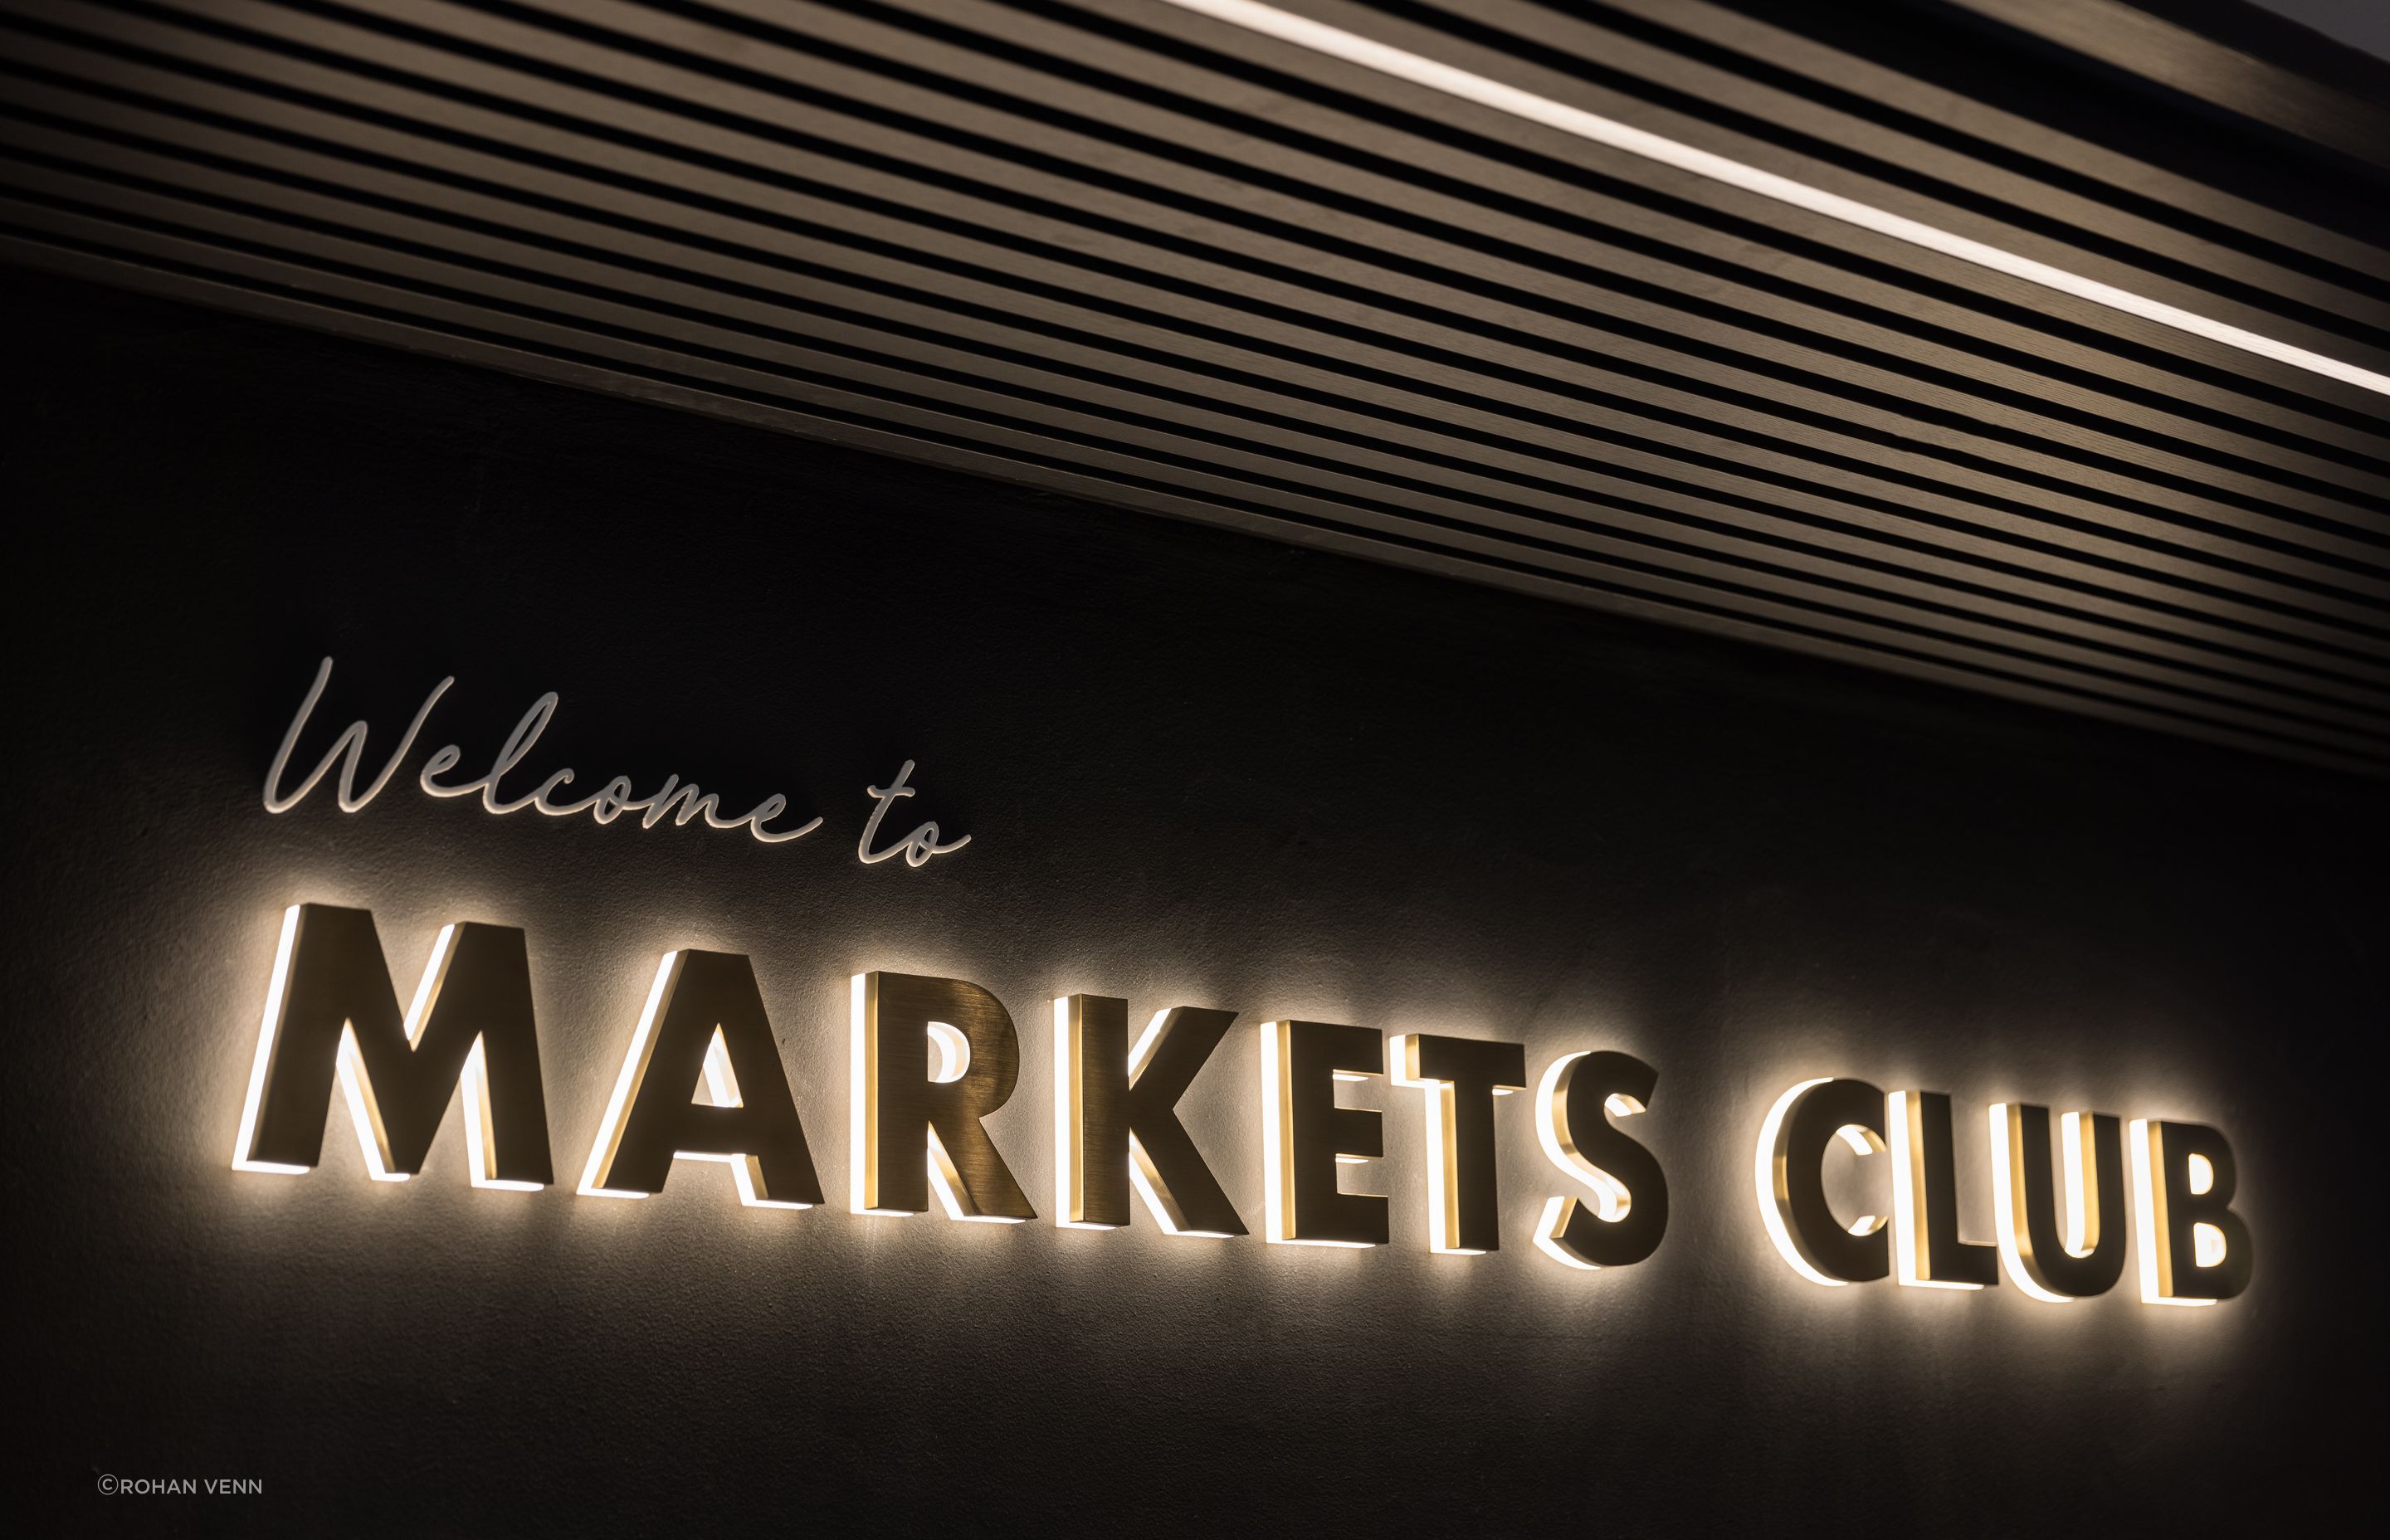 The Markets Club